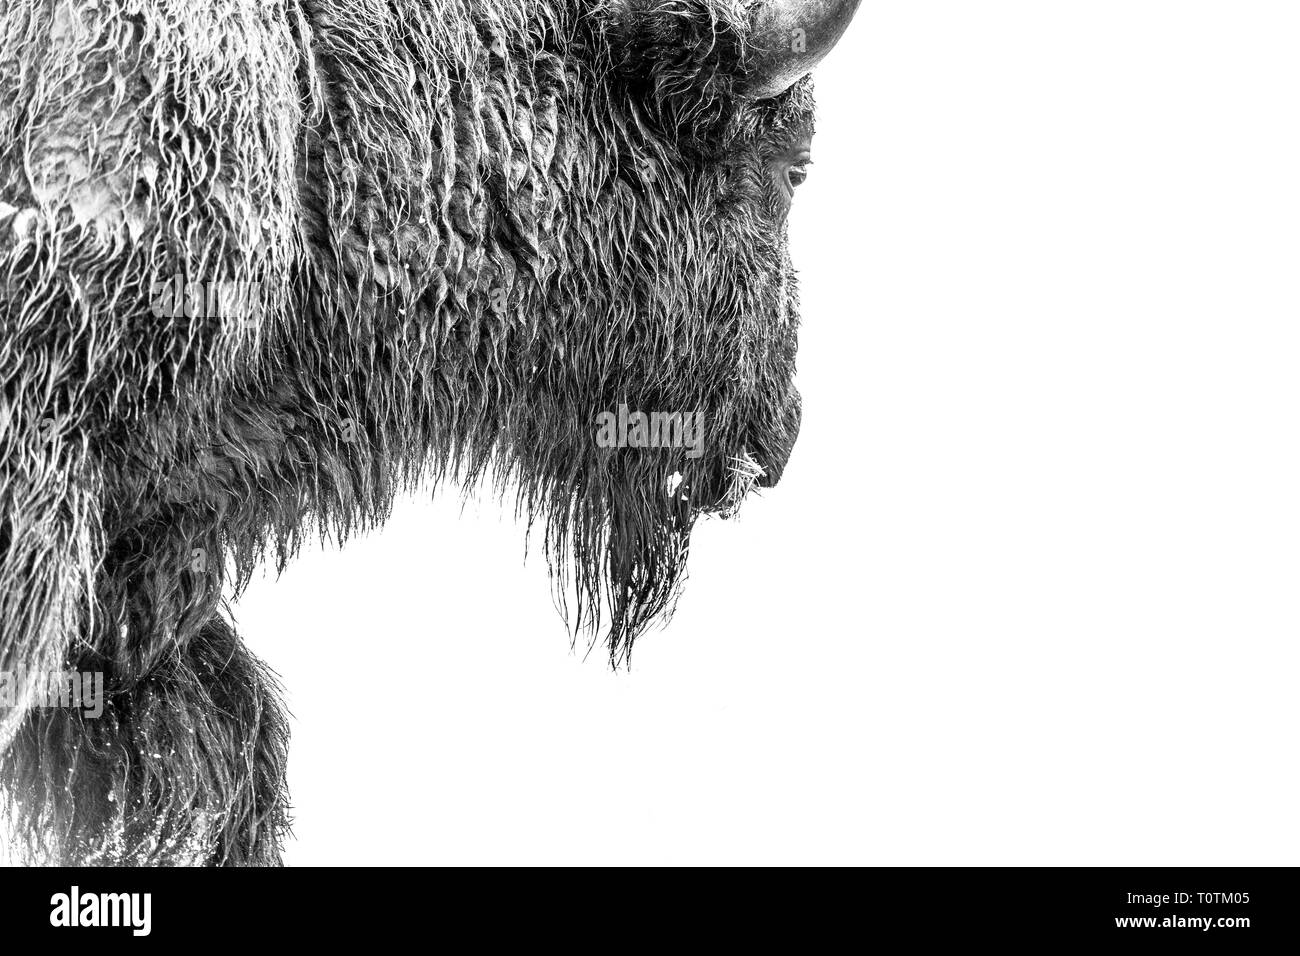 In bianco e nero di close-up verticale di un bisonte a piedi mentre mangia erba Foto Stock